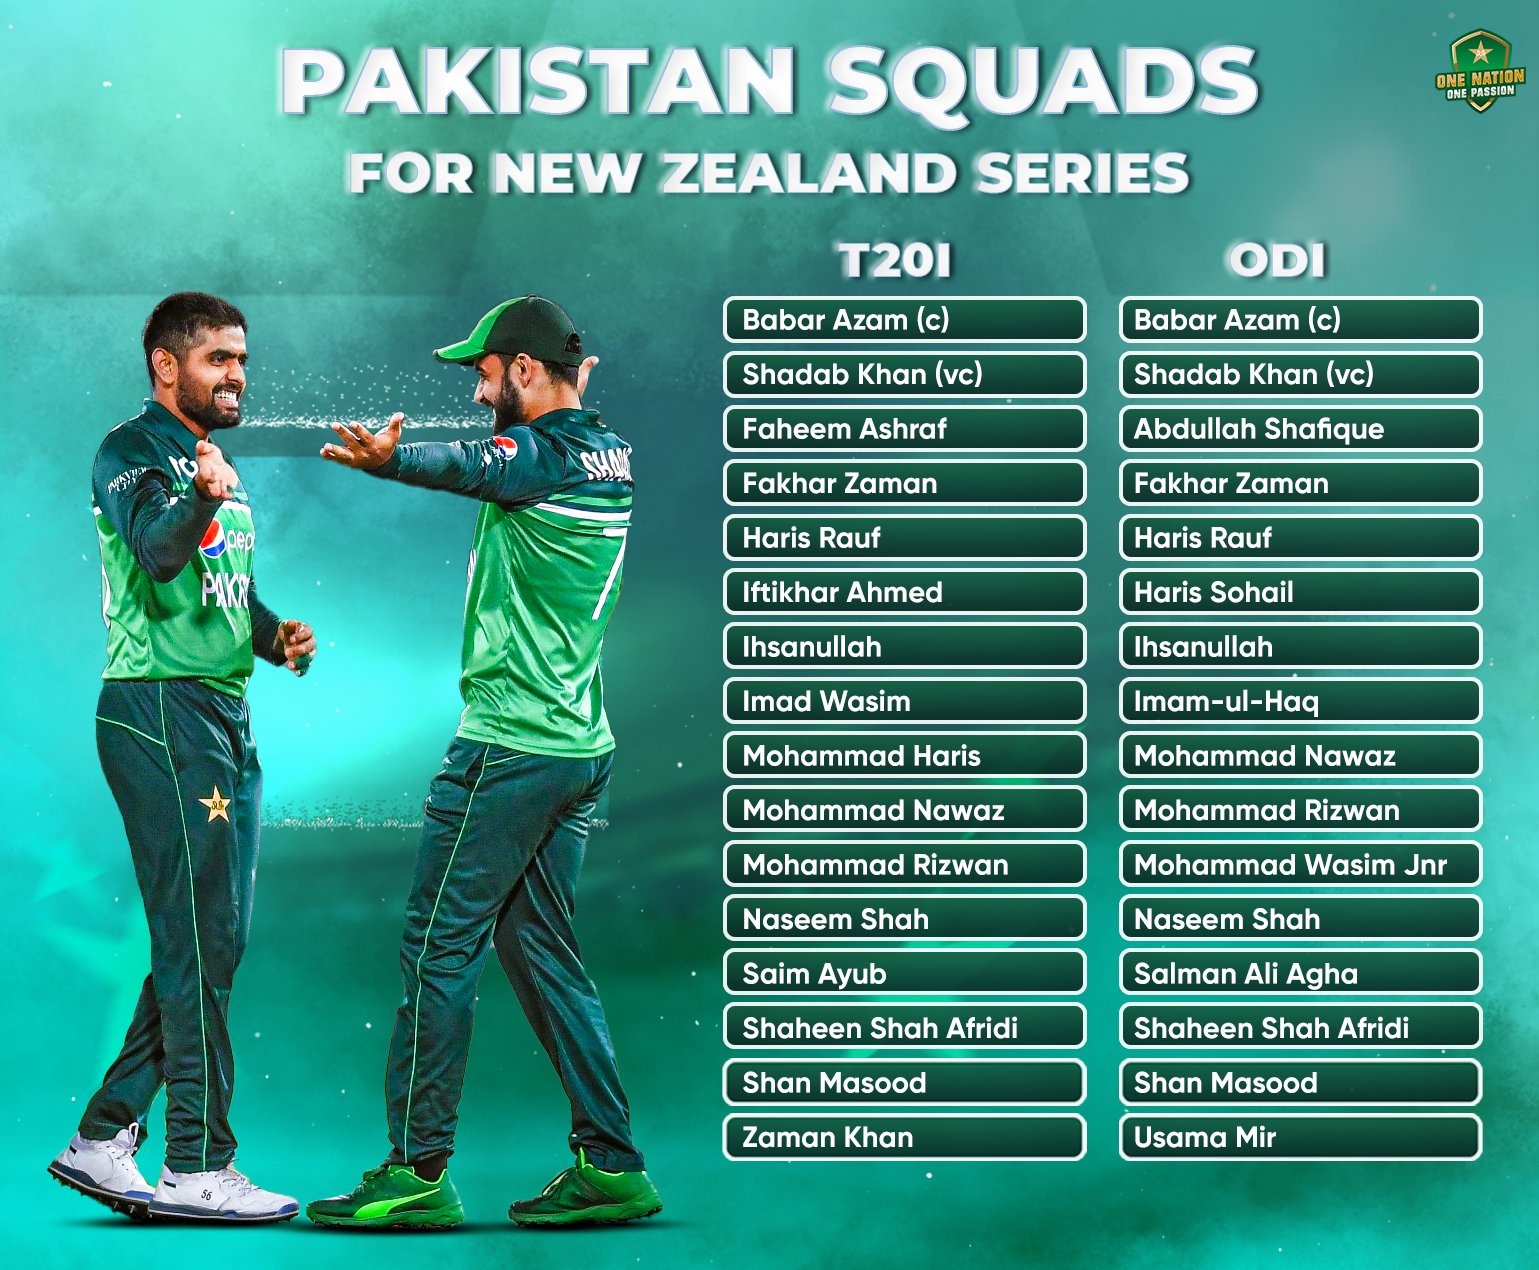 PAK Squad vs NZ Babar Azam Returns To Lead Pakistan In Home Series